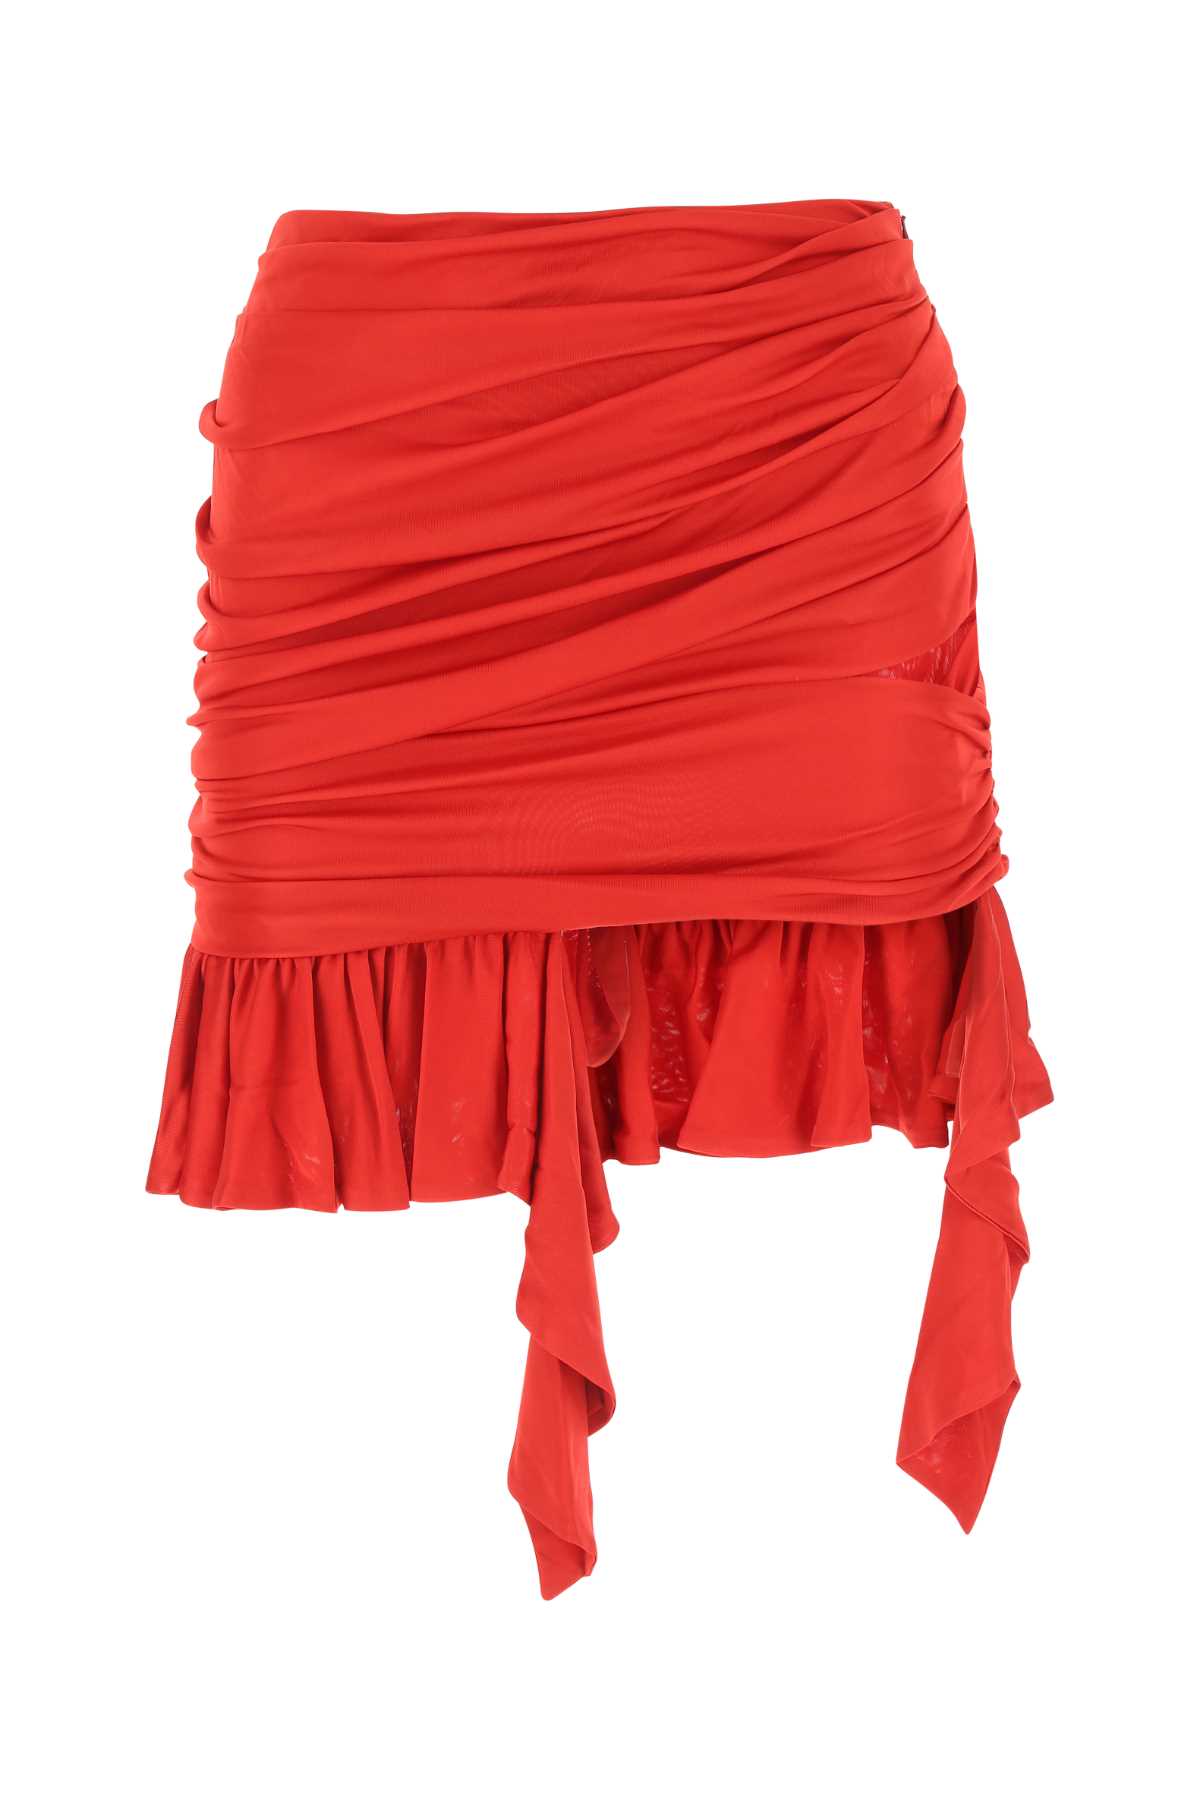 ANDREĀDAMO Red Viscose Mini Skirt